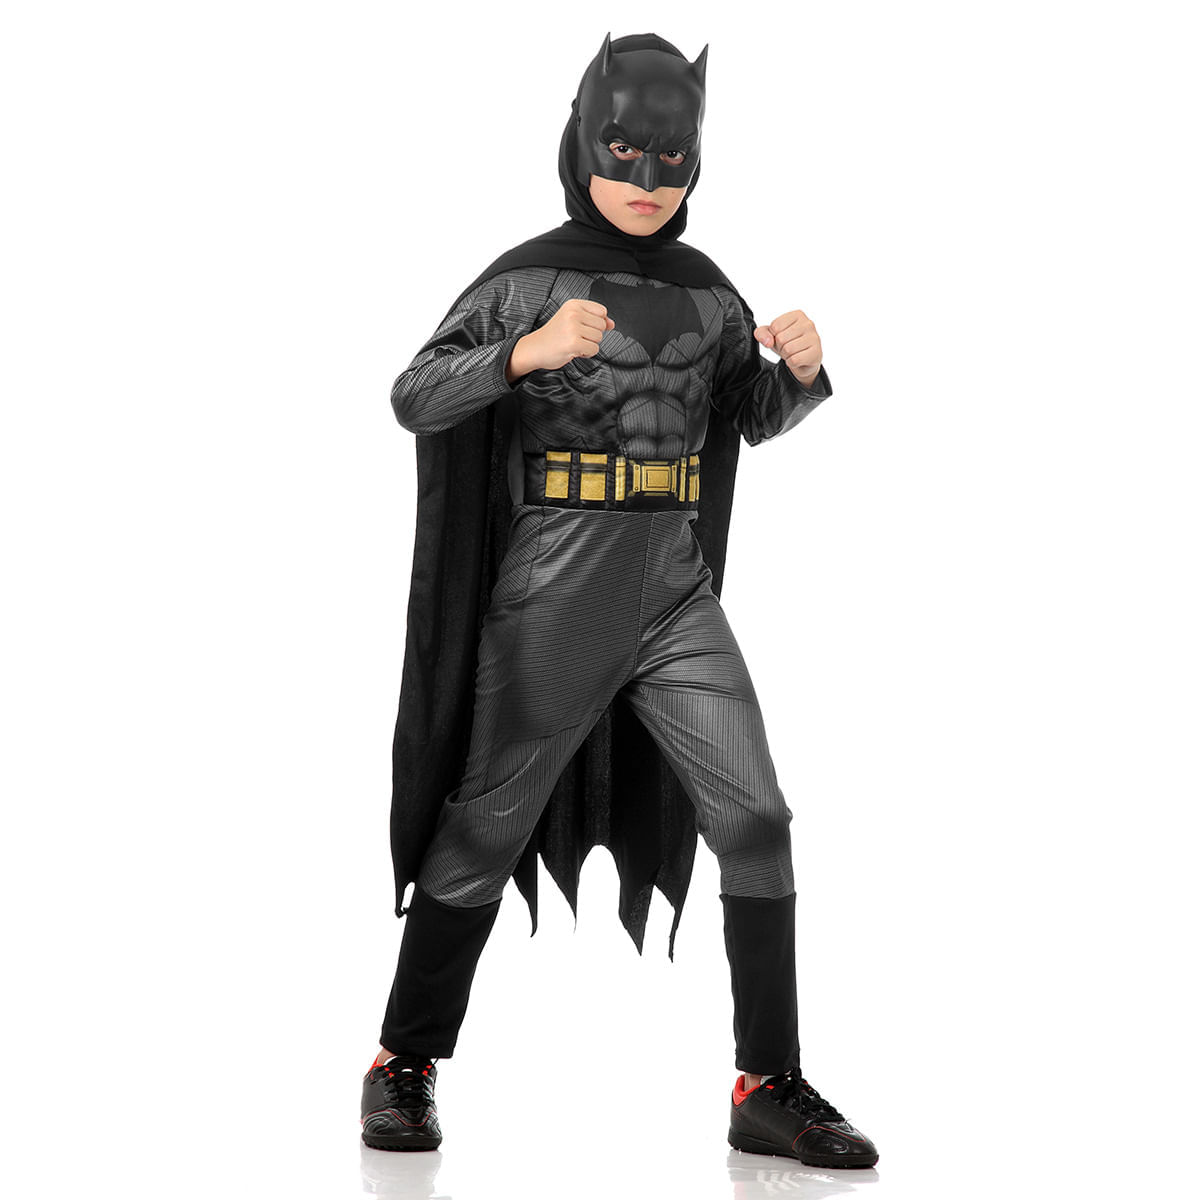 Fantasia Batman com Musculatura Infantil - Liga da Justiça P / UNICA